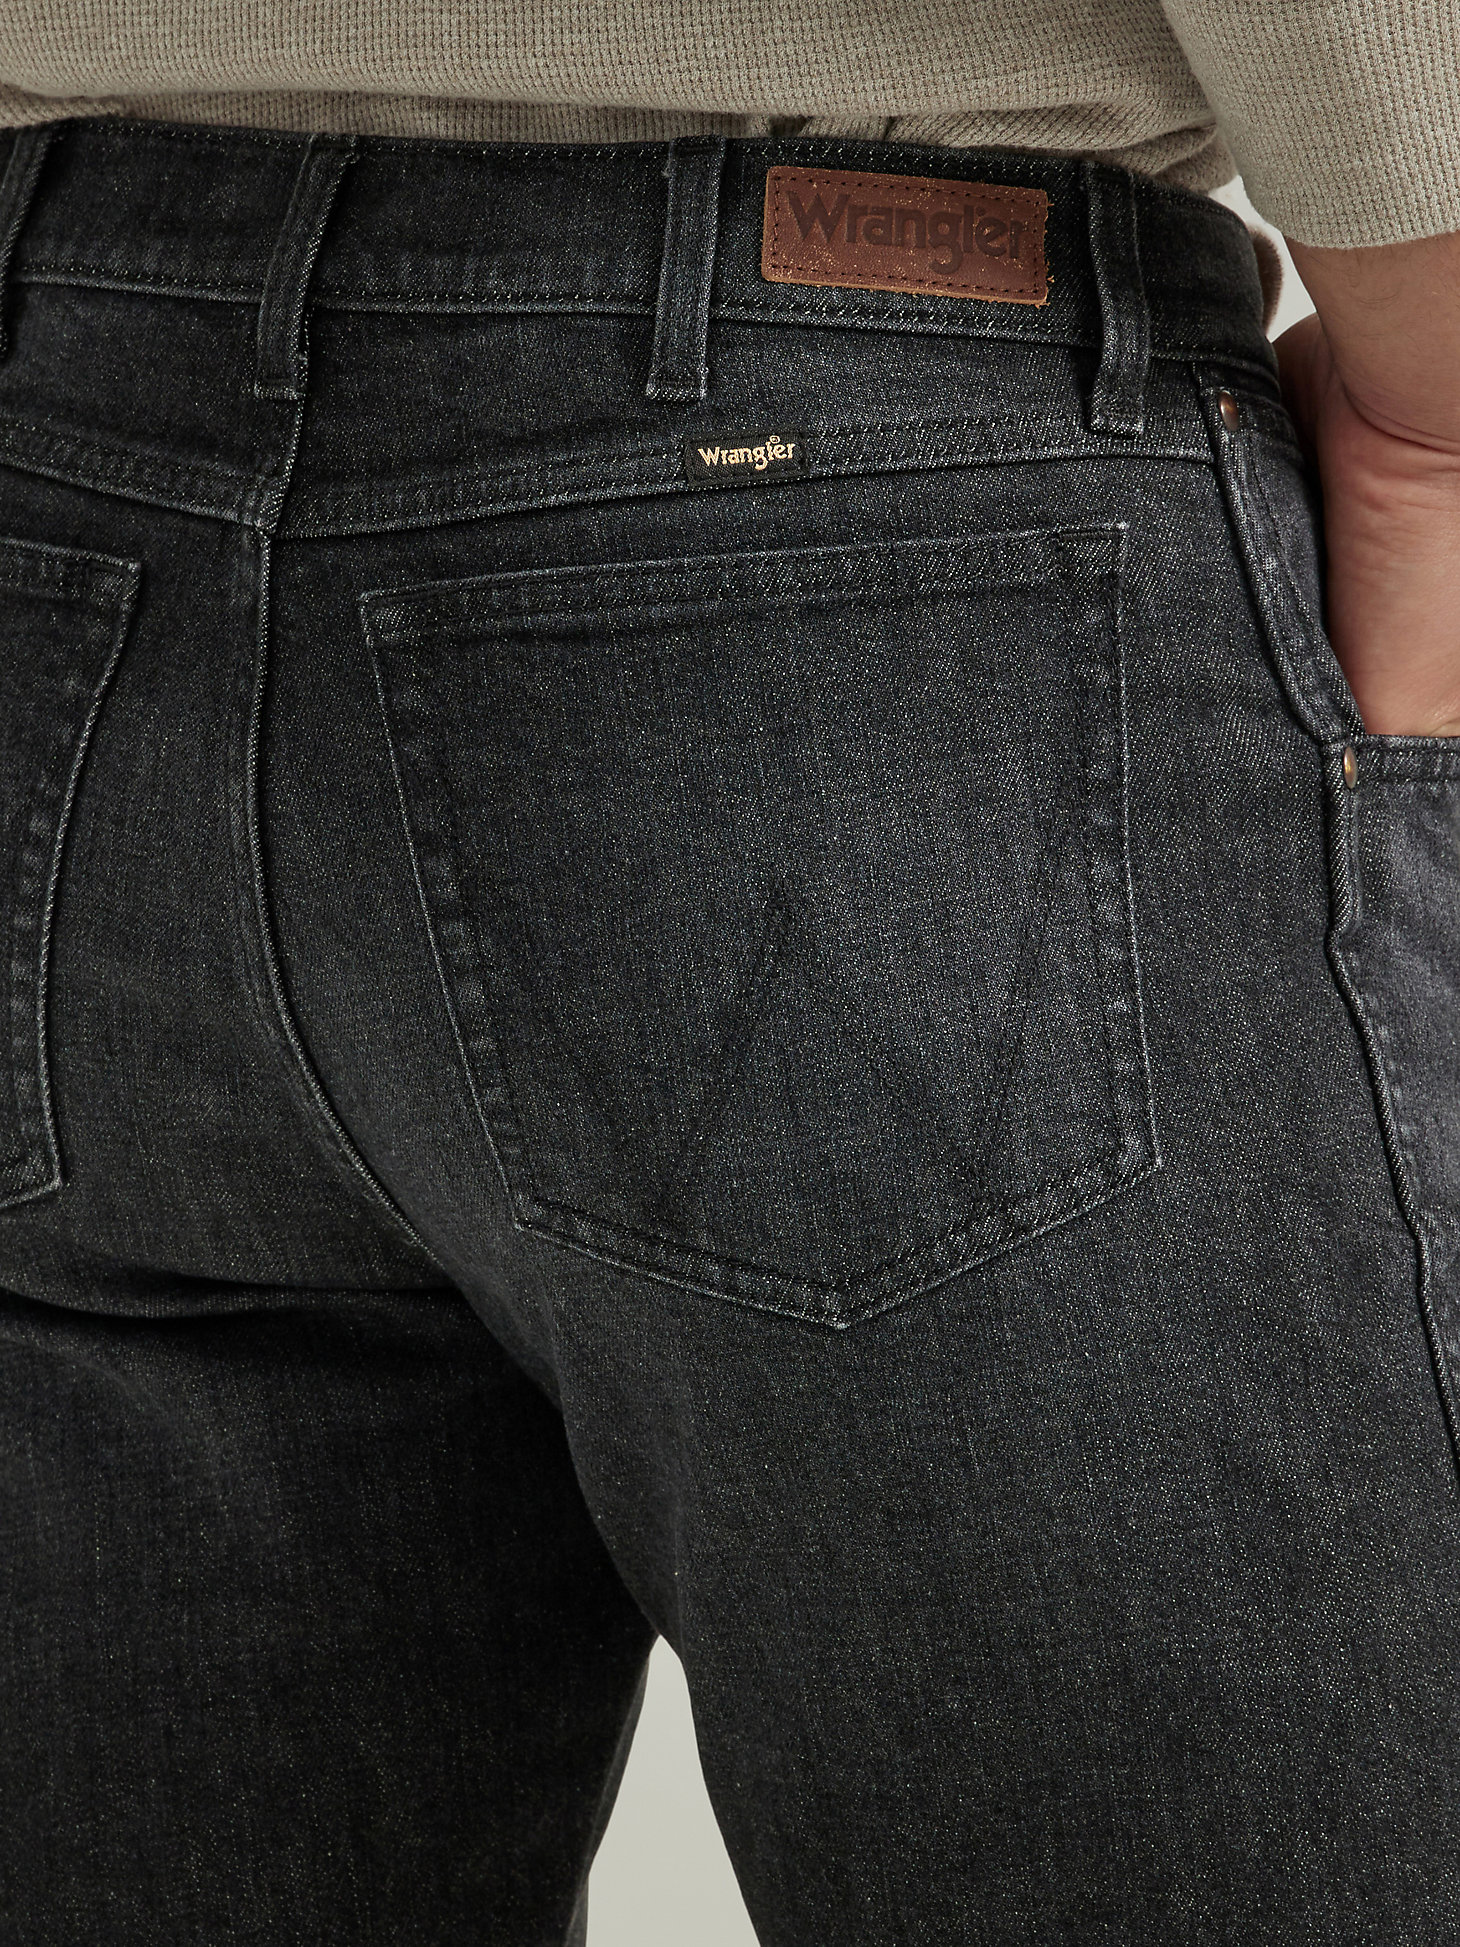 Men's Tapered Regular Fit Jean in Grey Wash alternative view 6